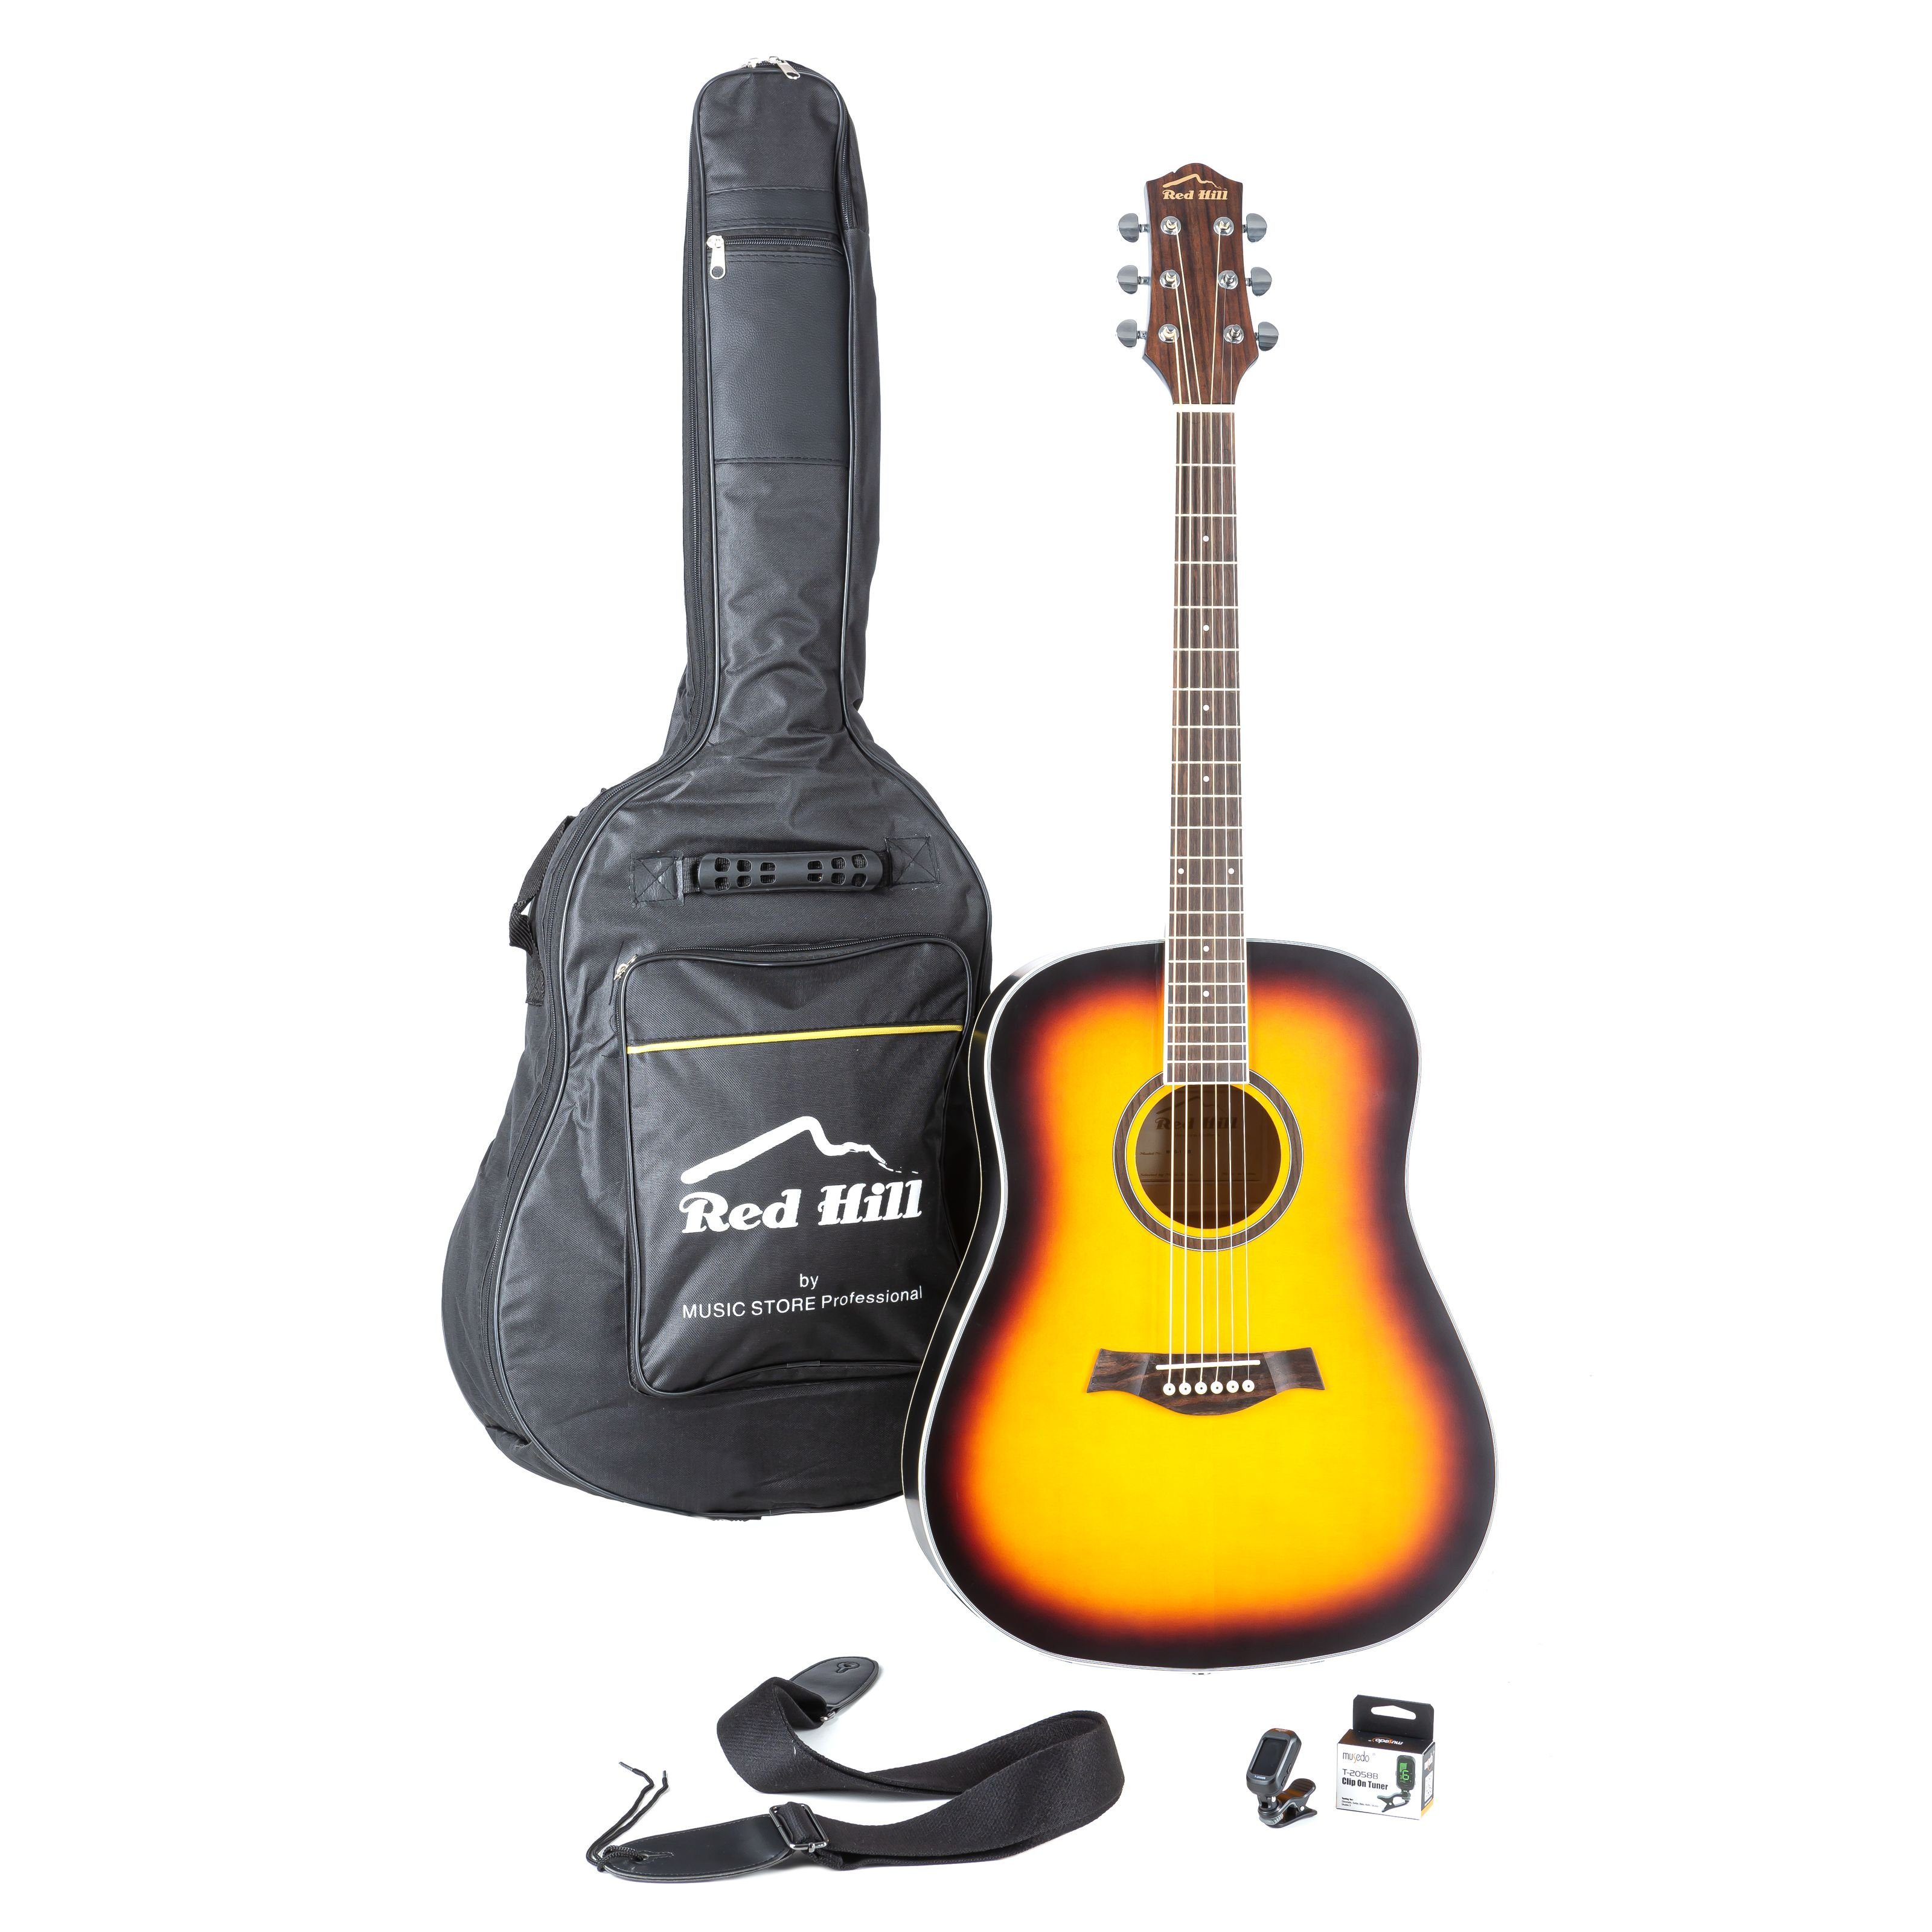 Red Hill Spielzeug-Musikinstrument, WGS-1 SB Starter Kit - Westerngitarre